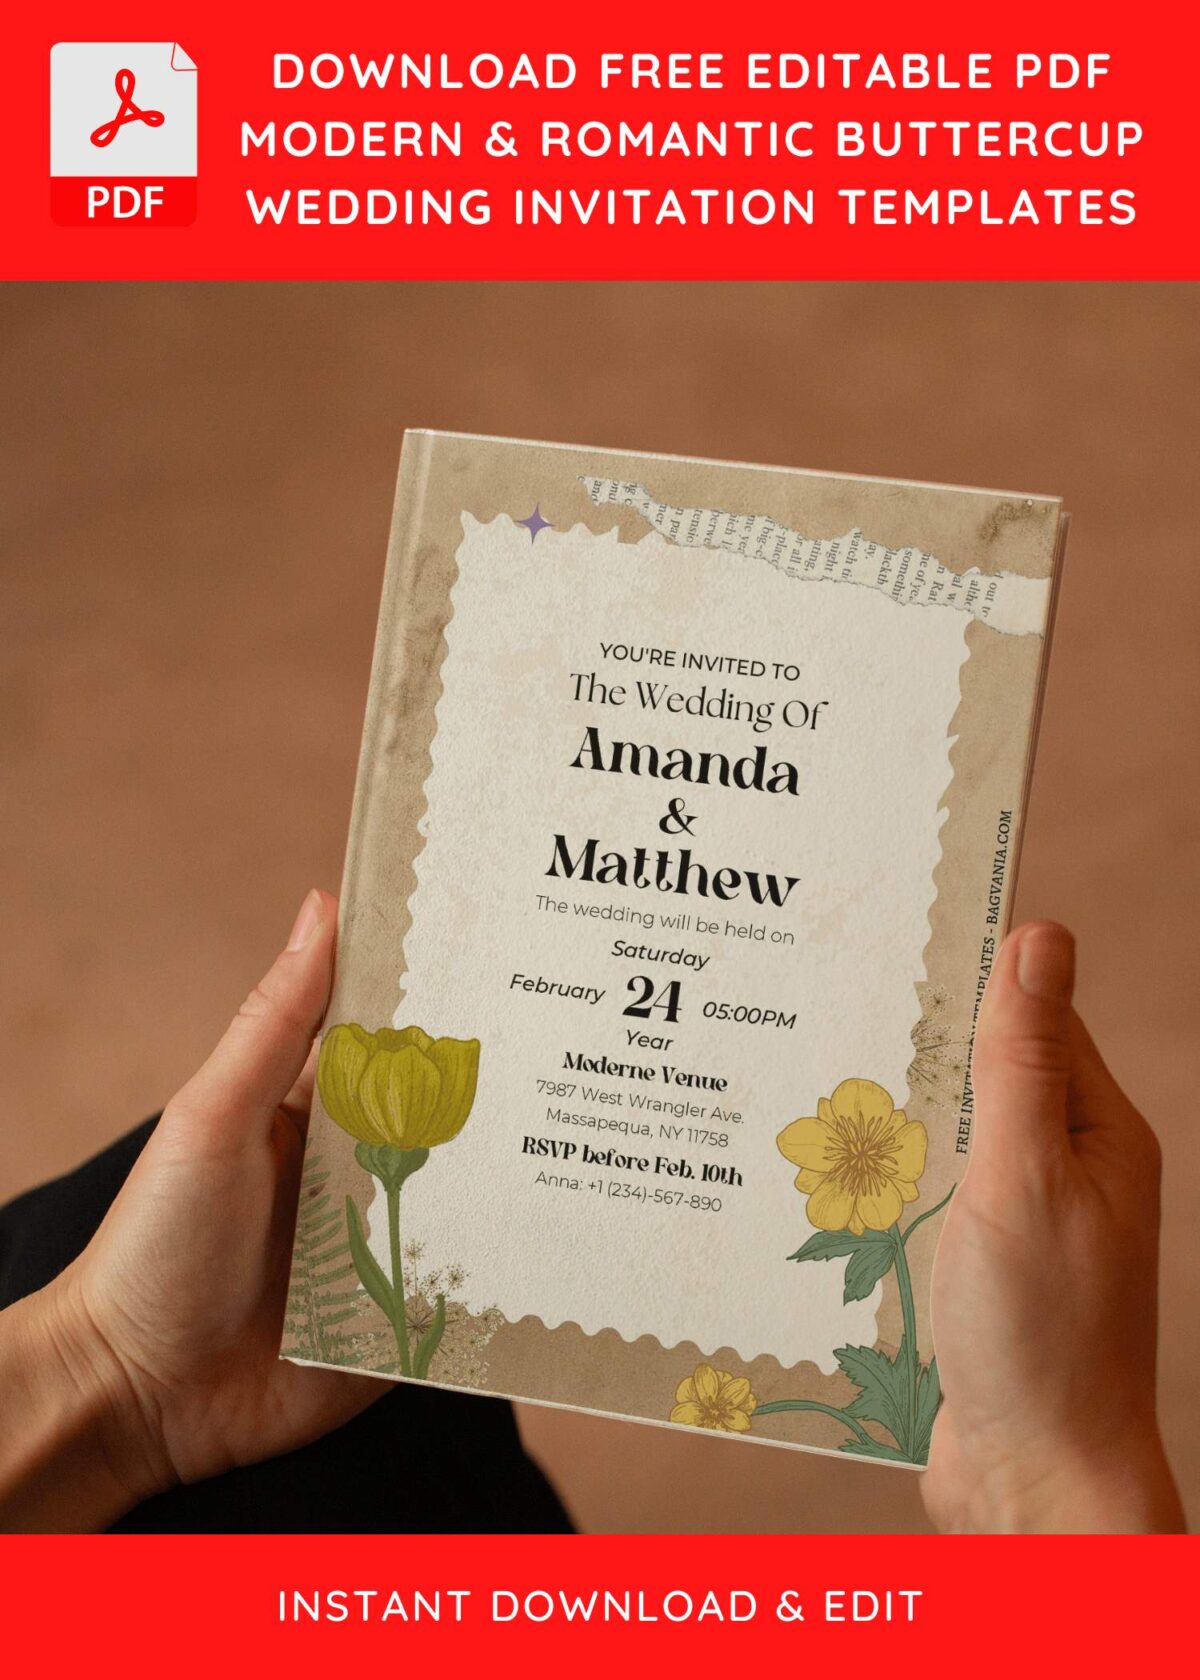 (Free Editable PDF) Rustic Vintage Buttercup Wedding Invitation Templates E